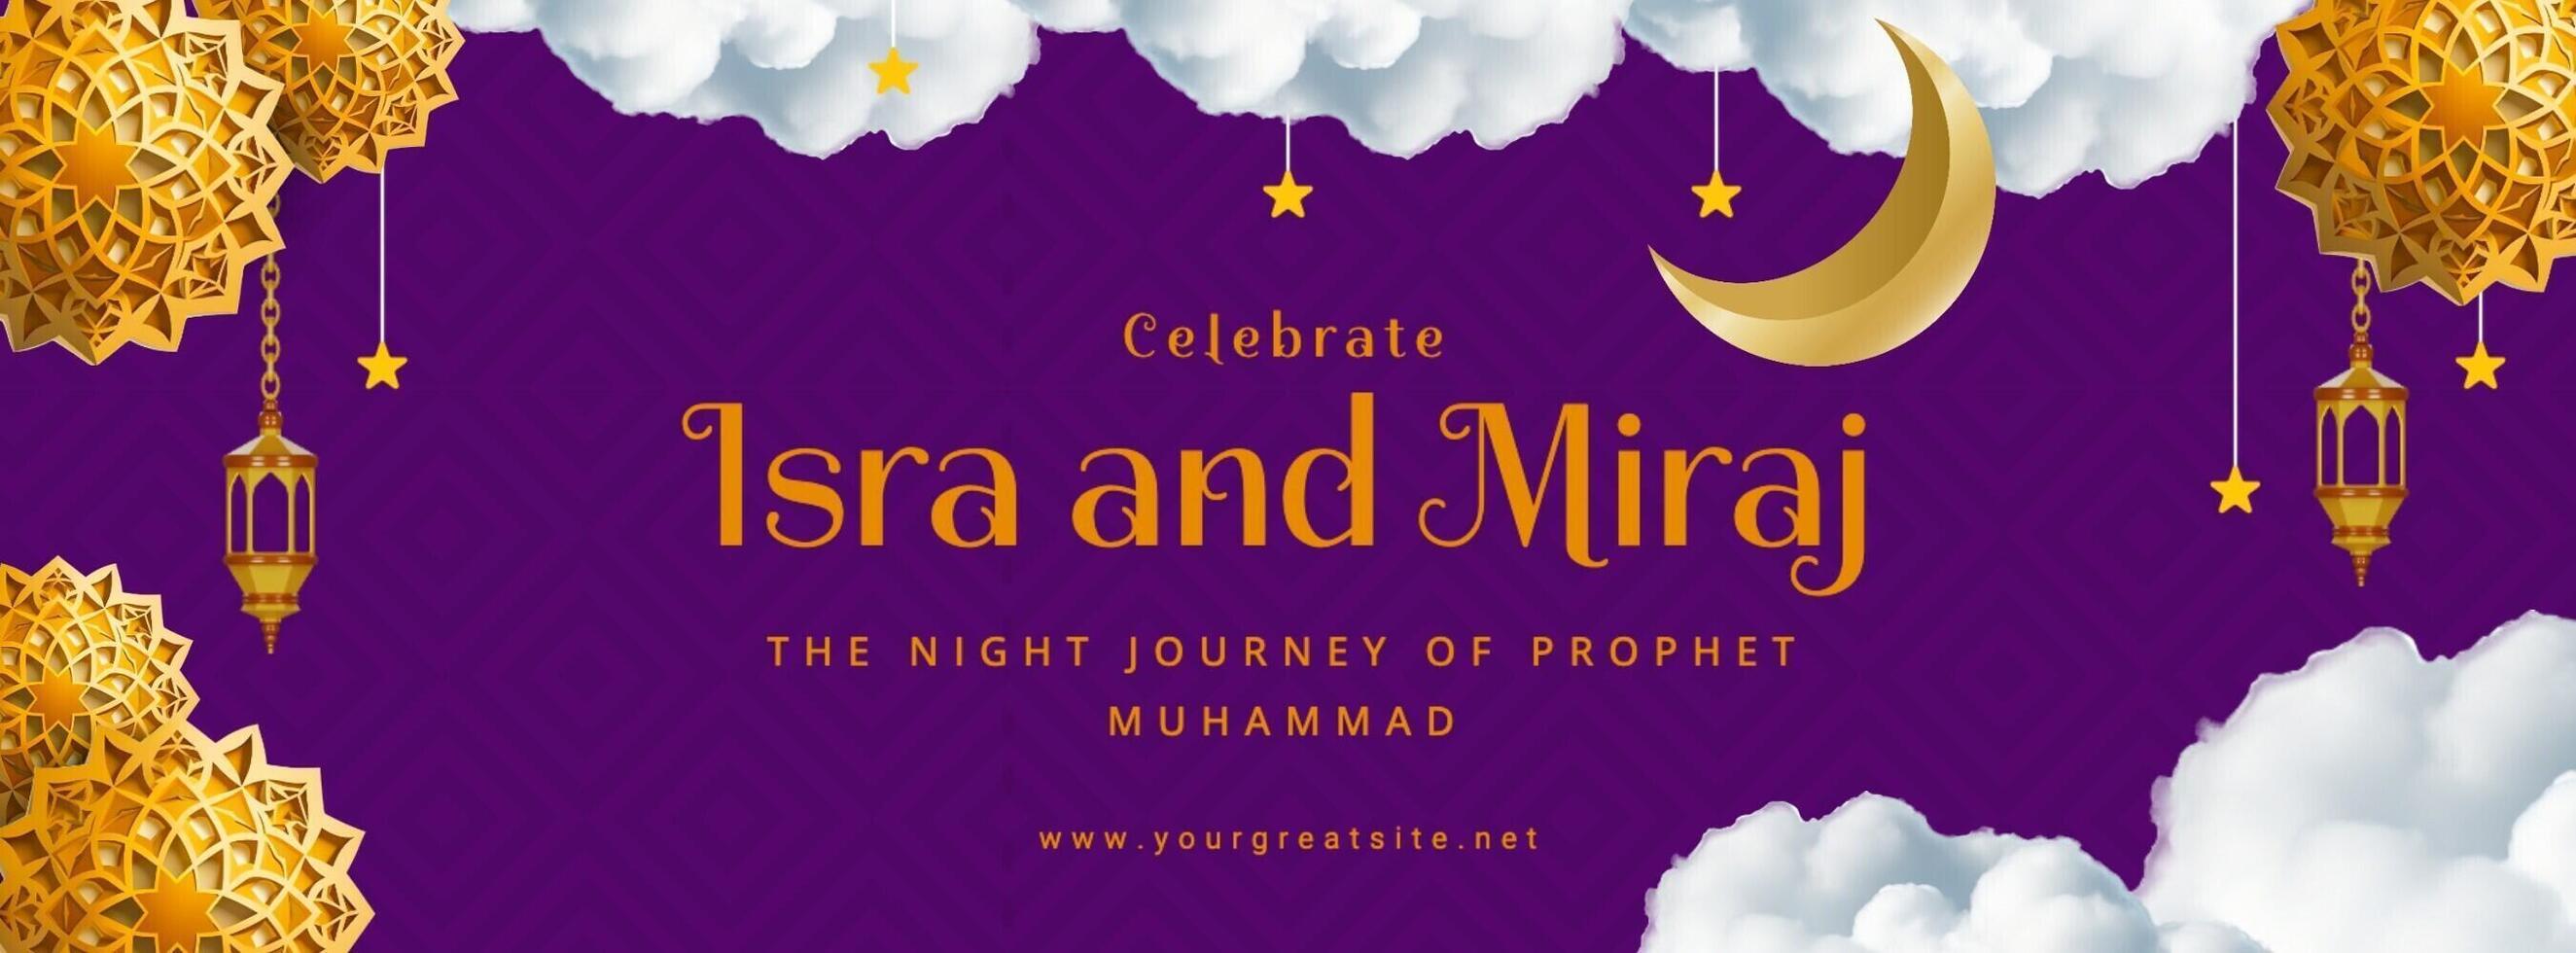 isra and miraj social media banner template